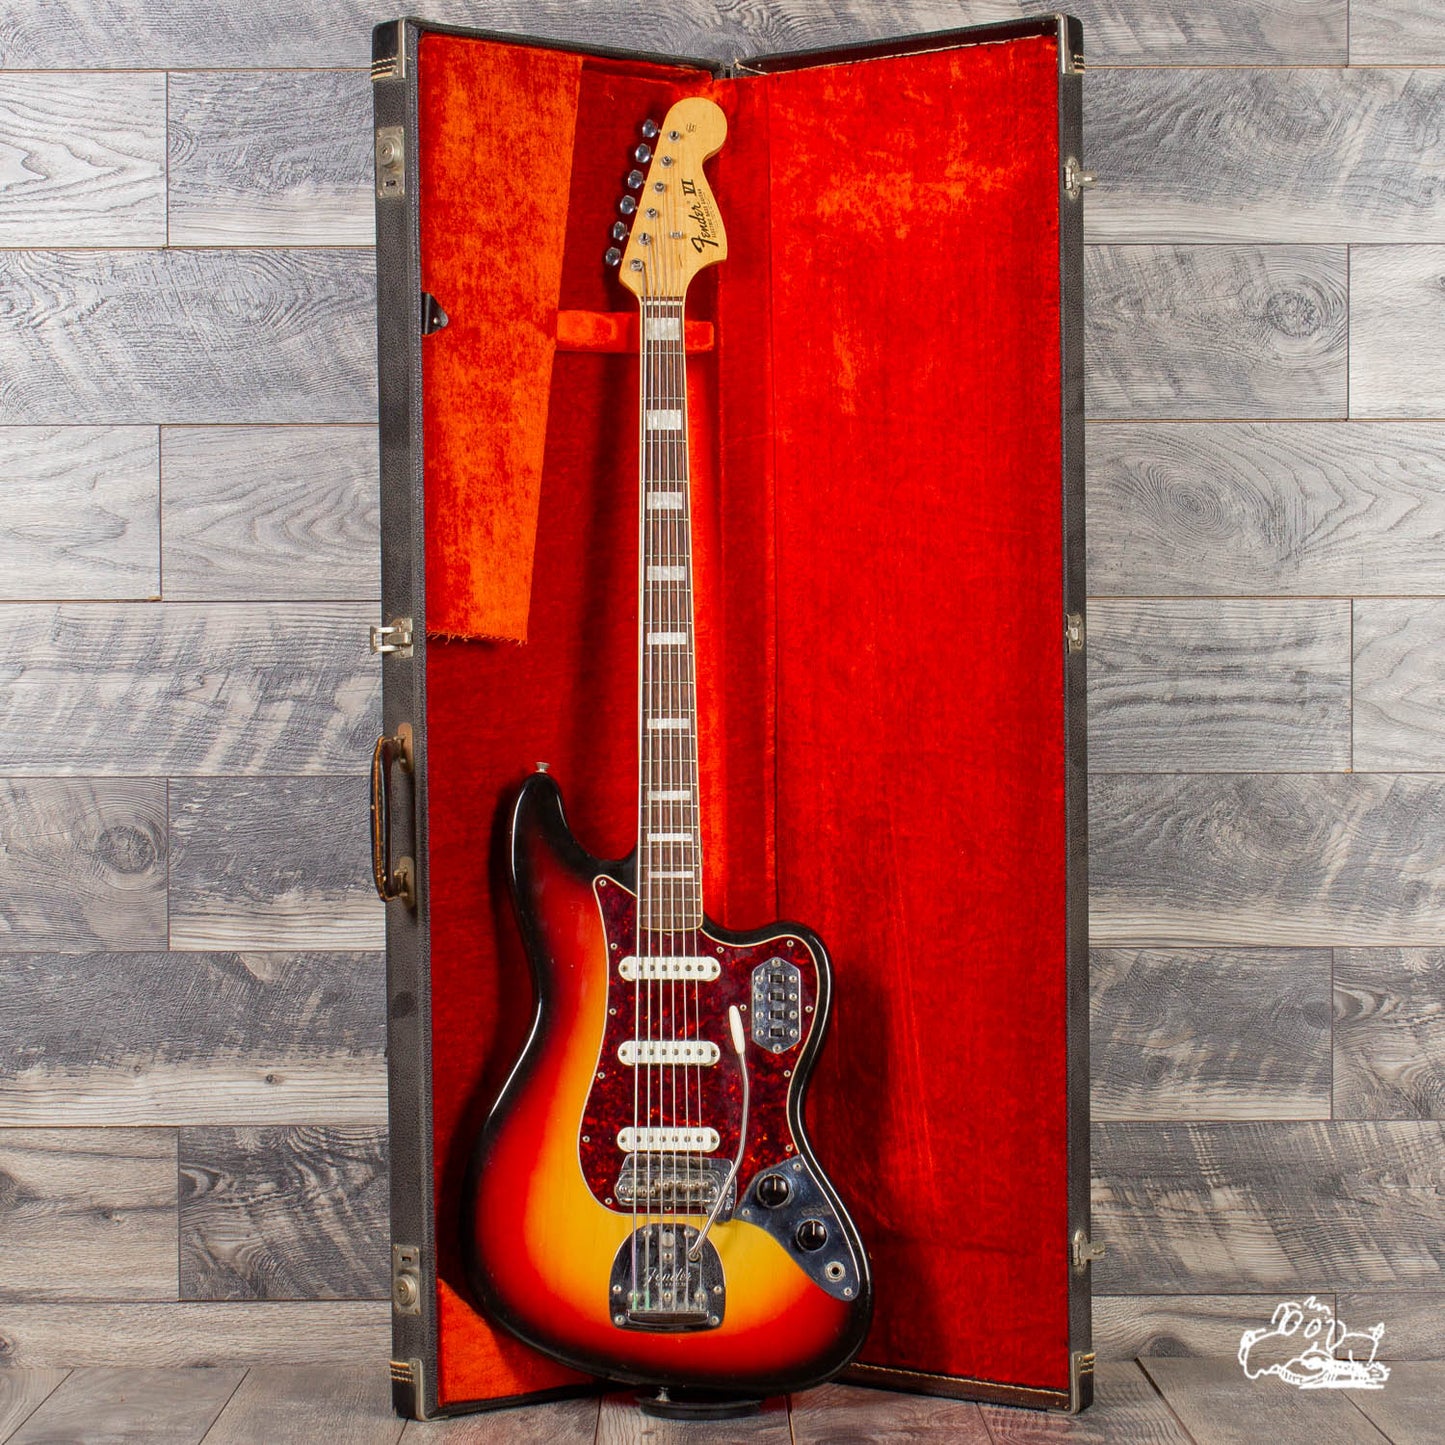 1973 Fender Bass VI